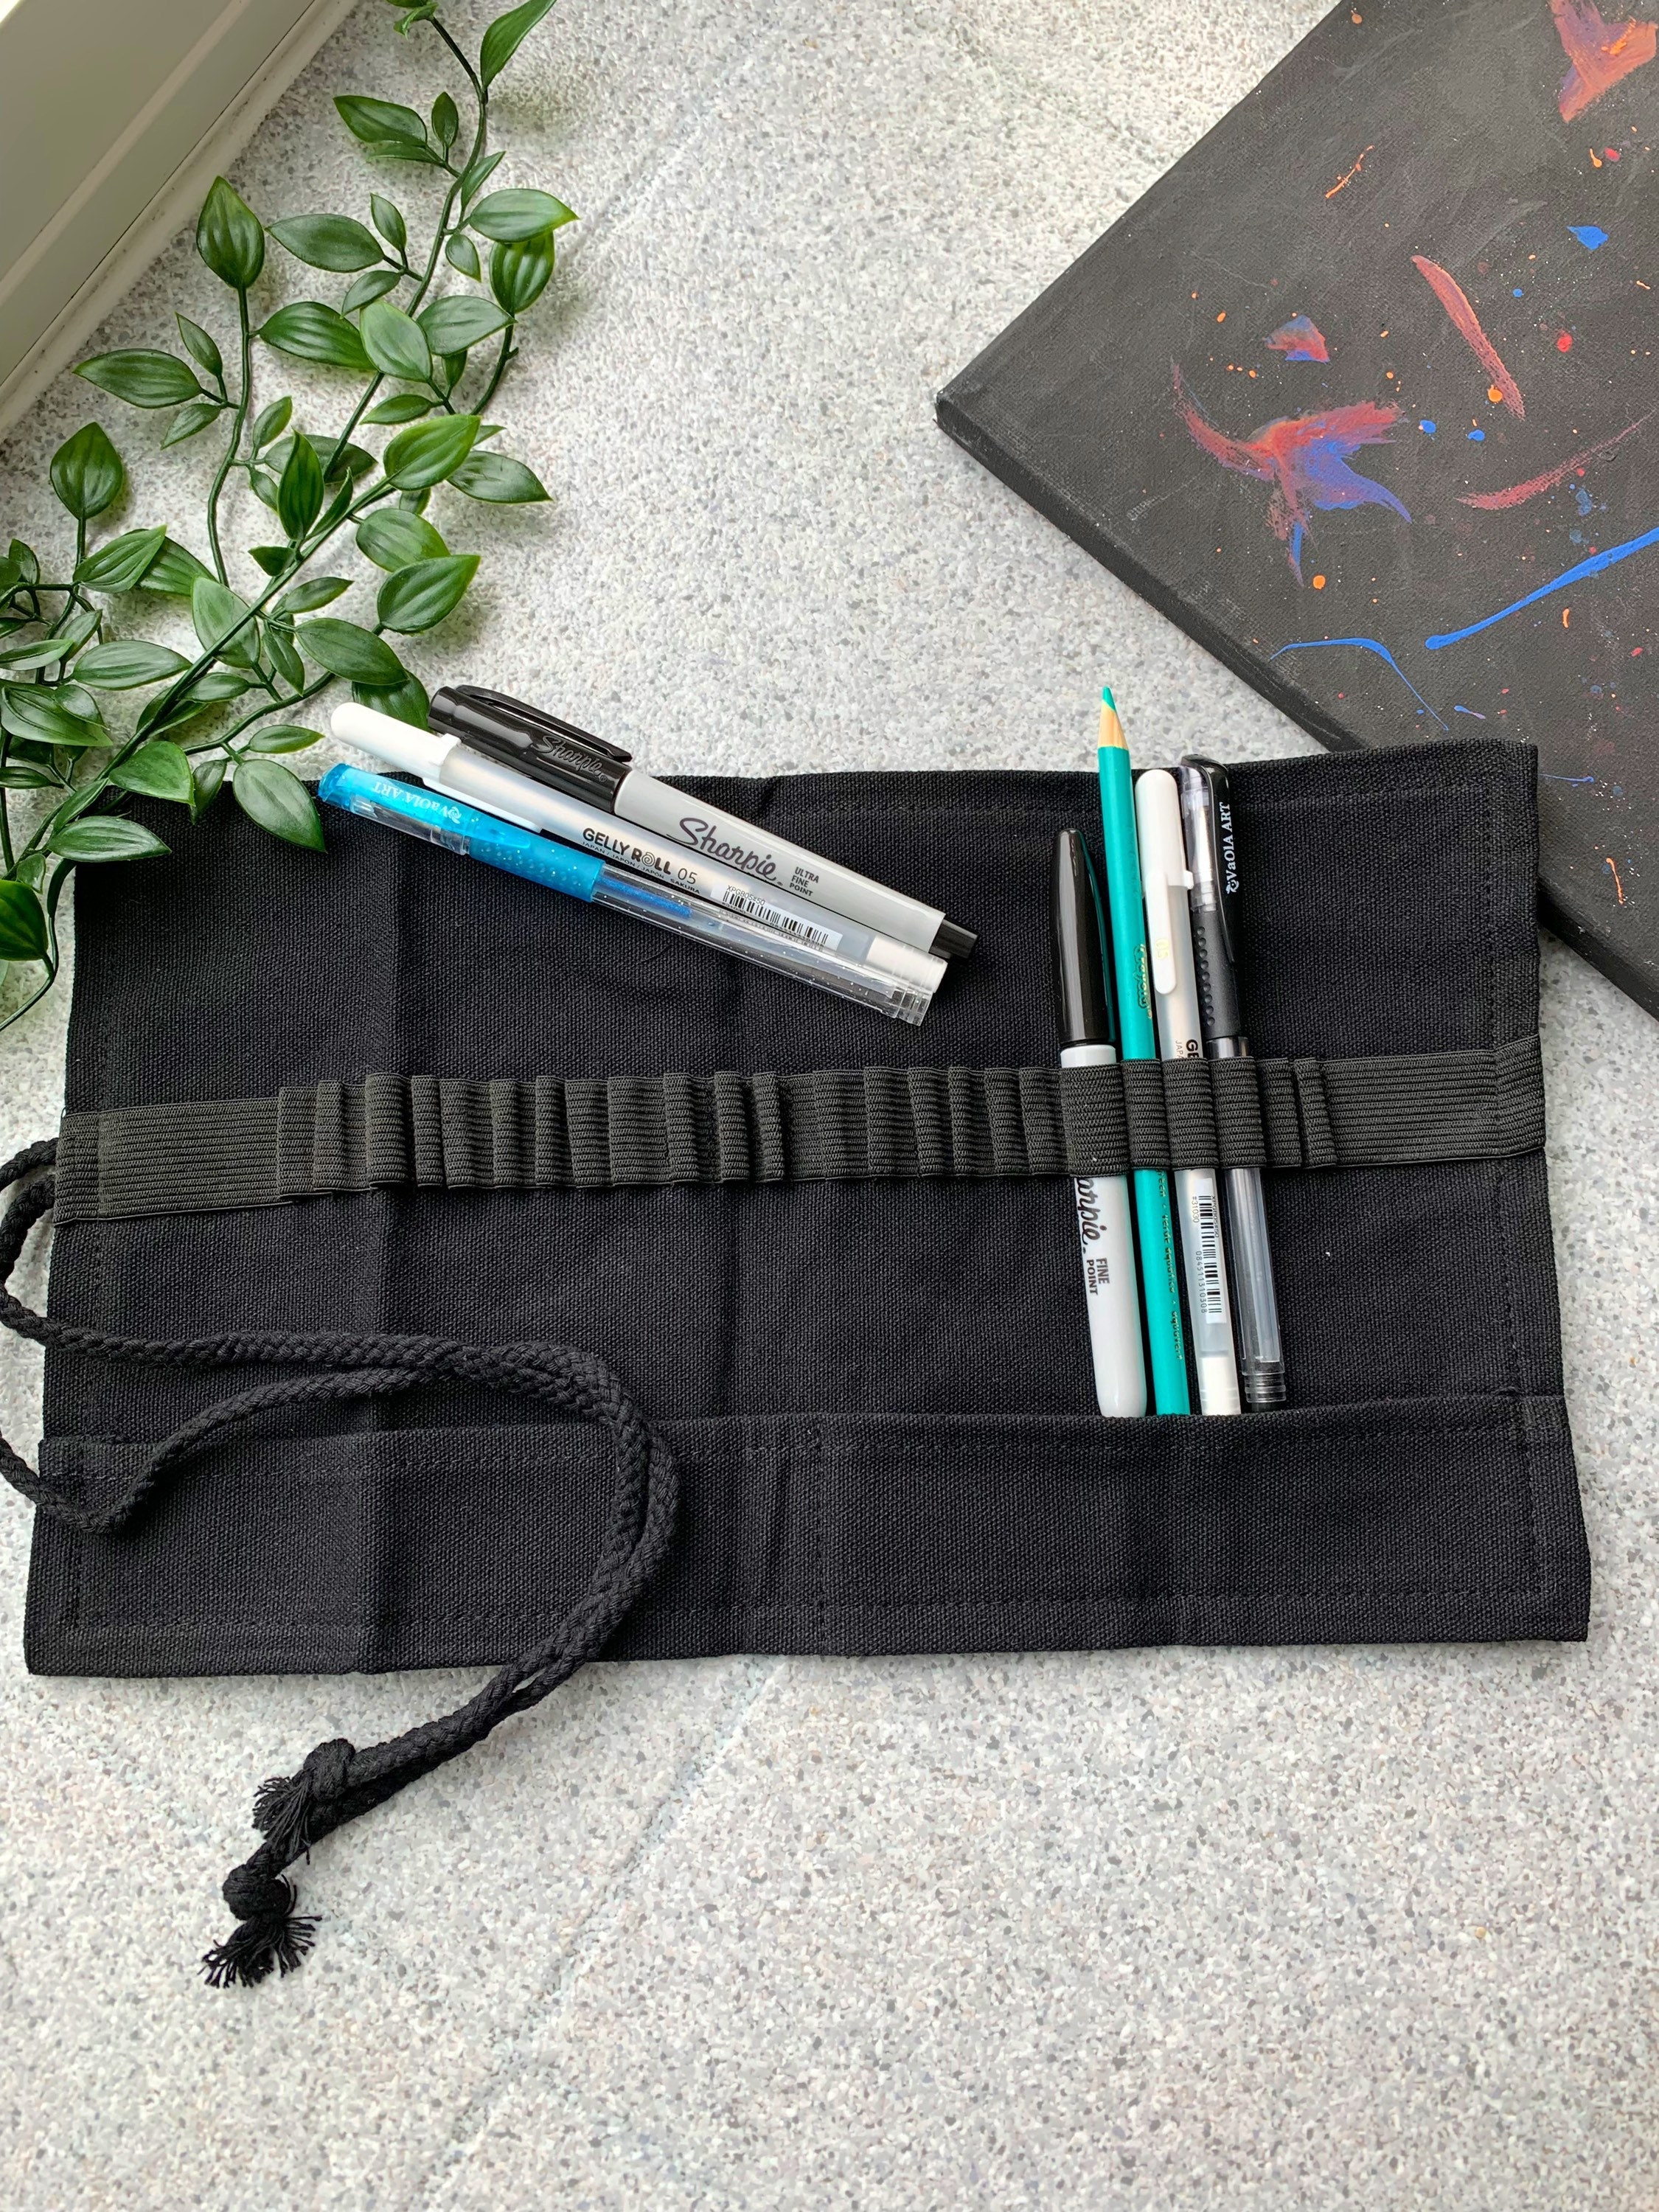 BTSKY Canvas Pencil Roll Wrap 108 Slot--Adult Coloring Pencil